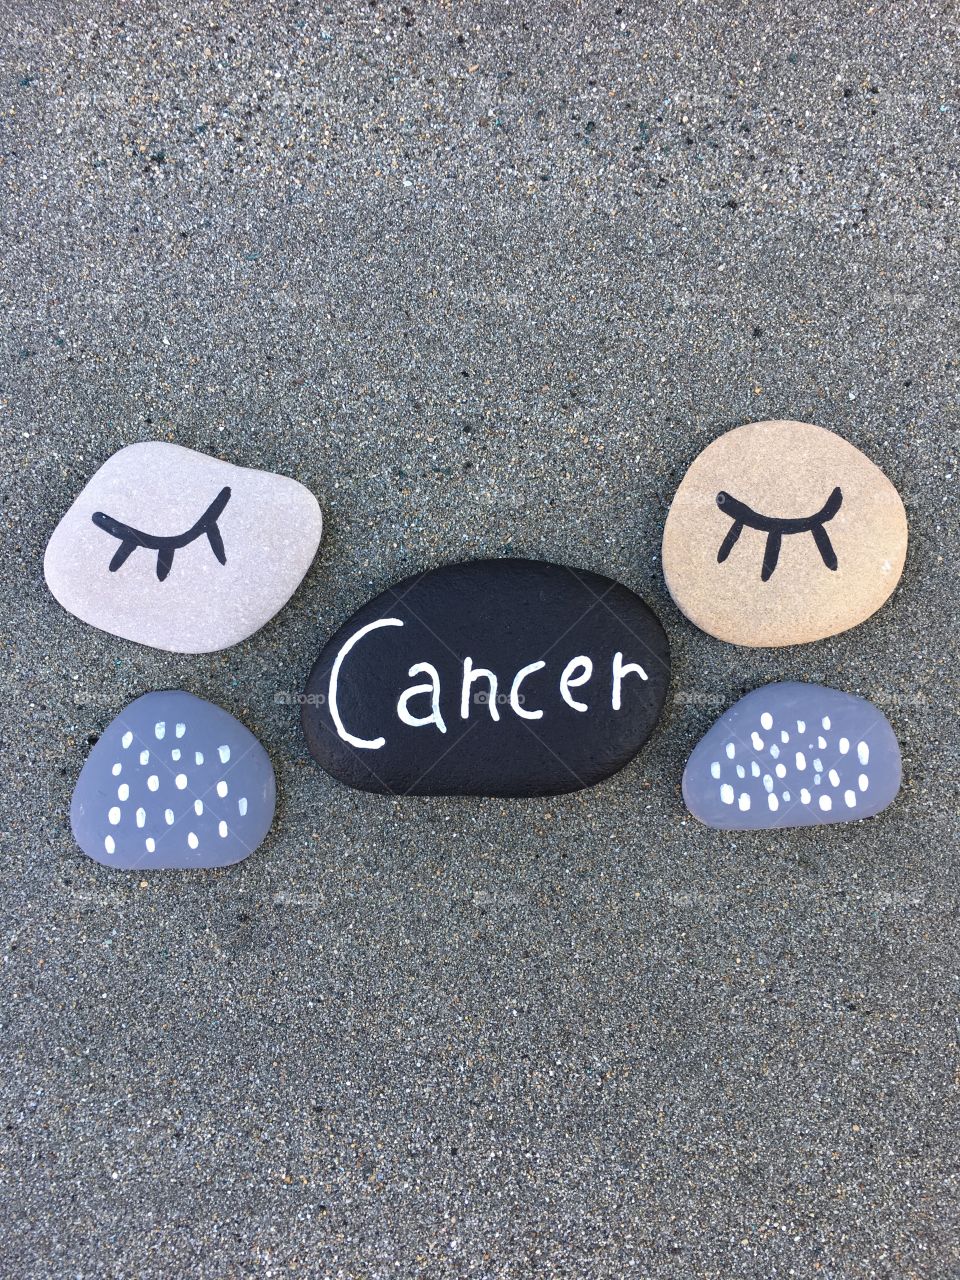 Cancer, conceptual stones composition over black sand 